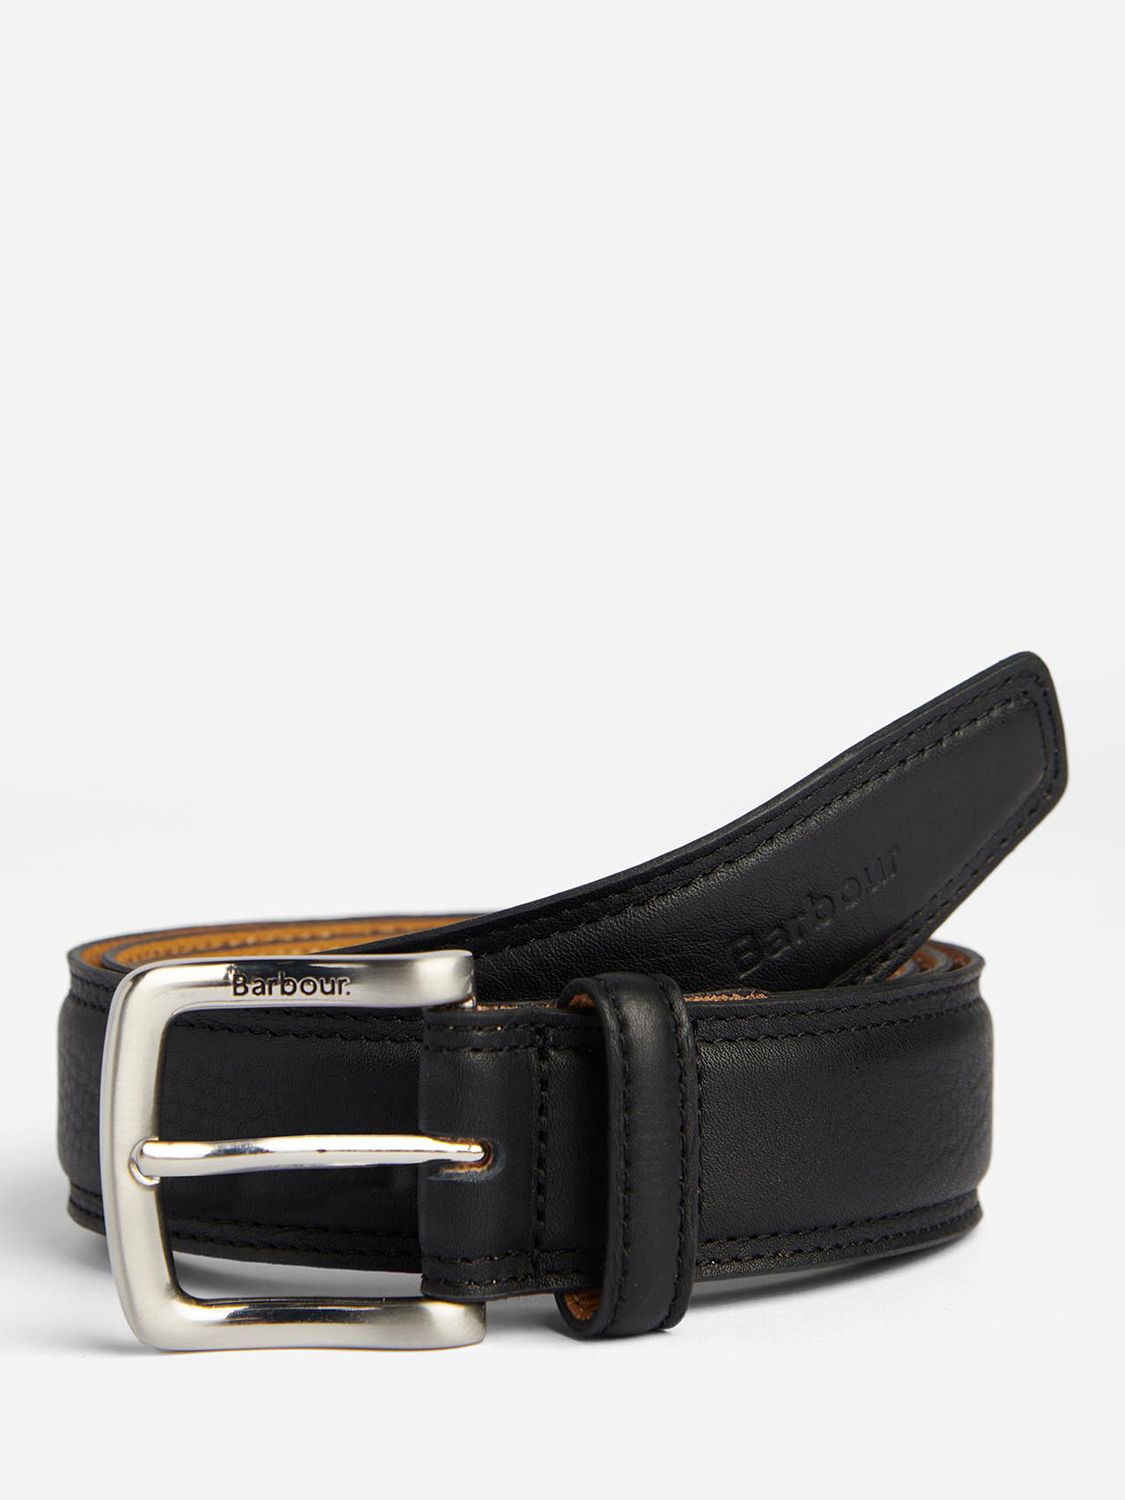 Barbour Moray Leather Belt, Black at John Lewis & Partners